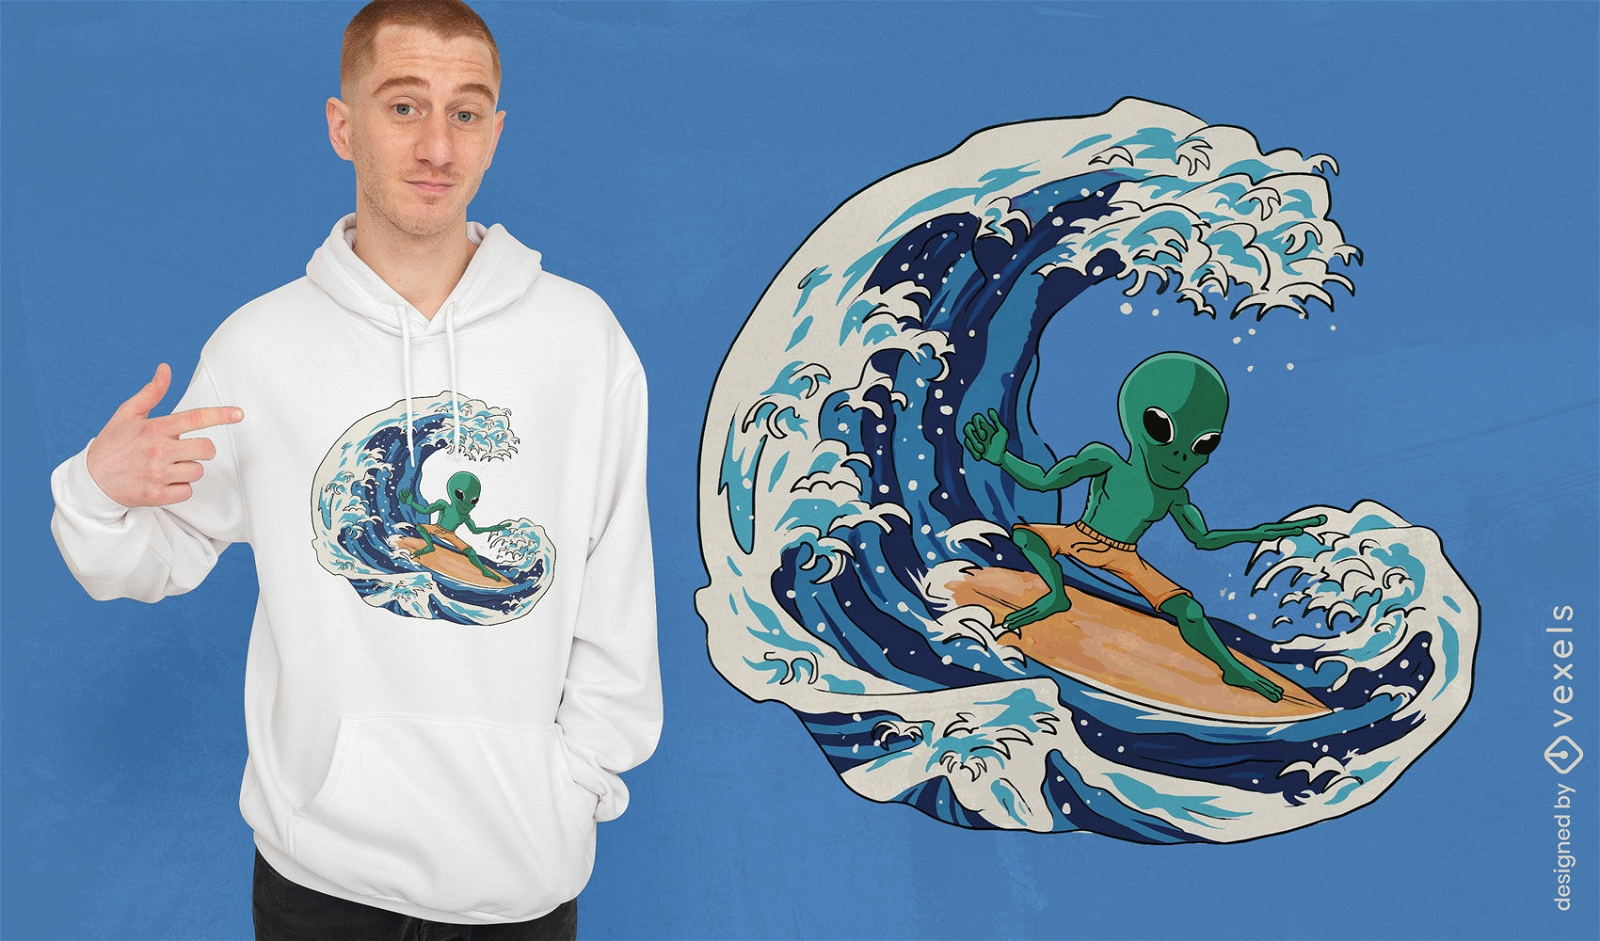 Dise?o de camiseta de surf alien?gena en olas.